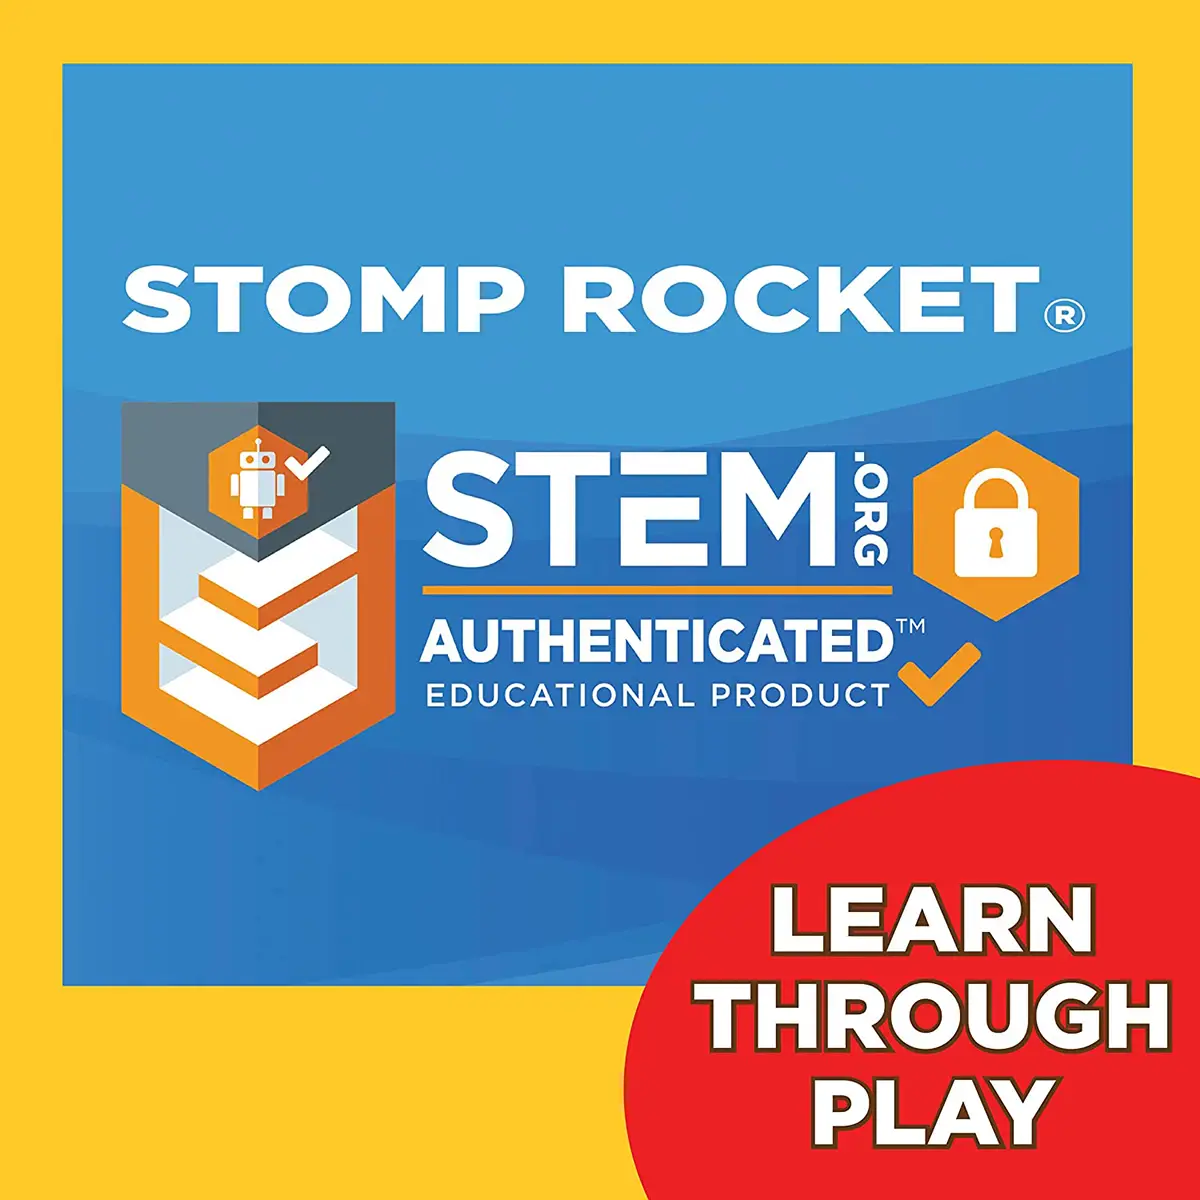 Stomp Rocket Original Dueling Rocket Launcher For Kids of Age 5Y+, Multicolour